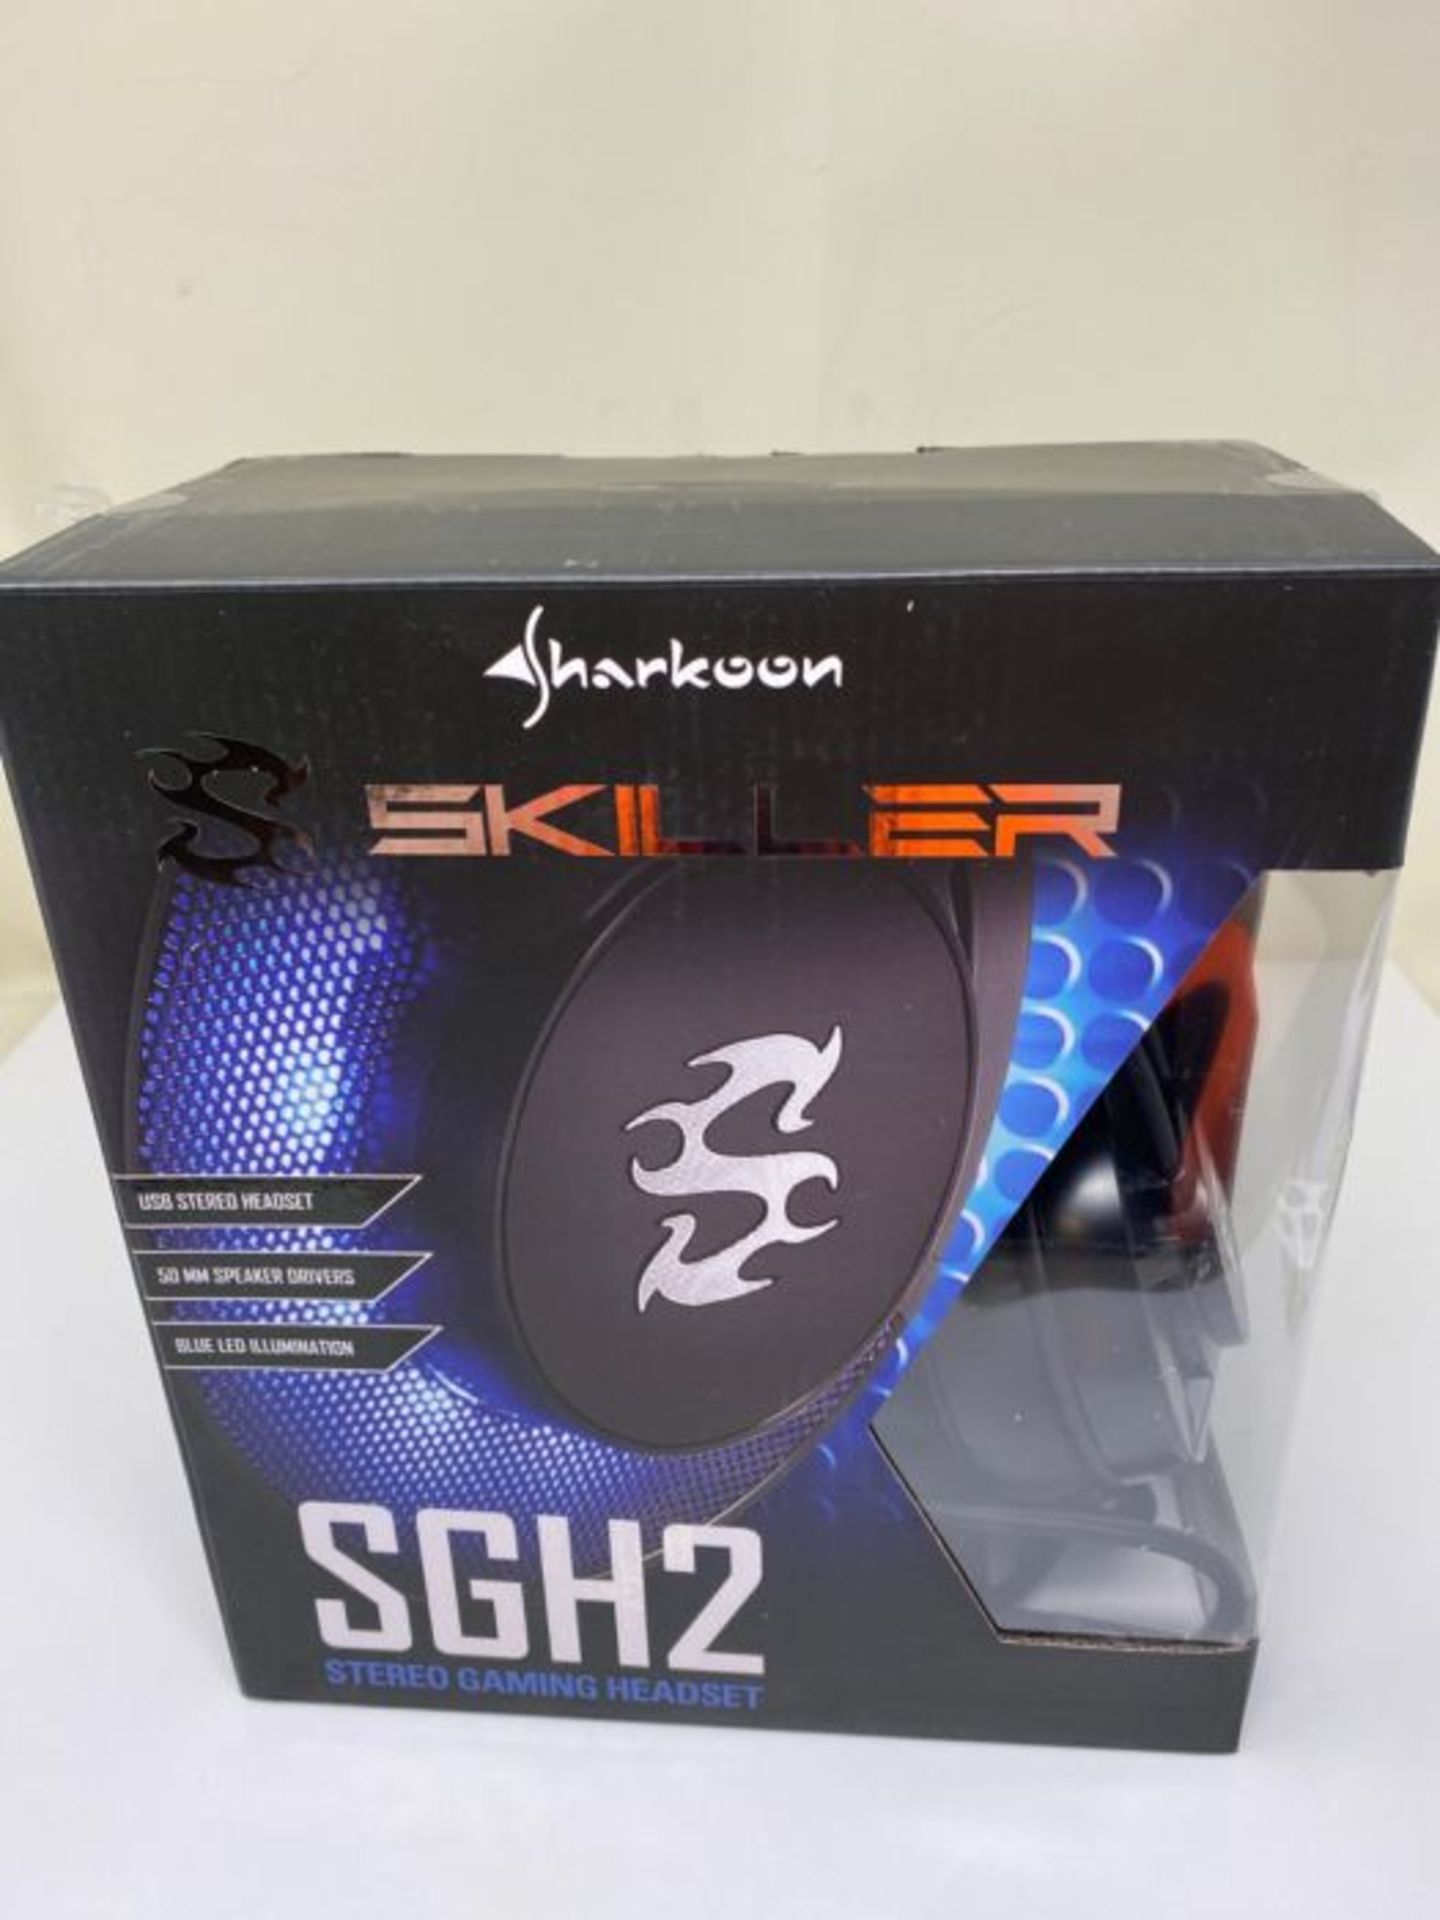 Sharkoon SKILLER SGH2 Gaming Headset - Black - Image 2 of 3